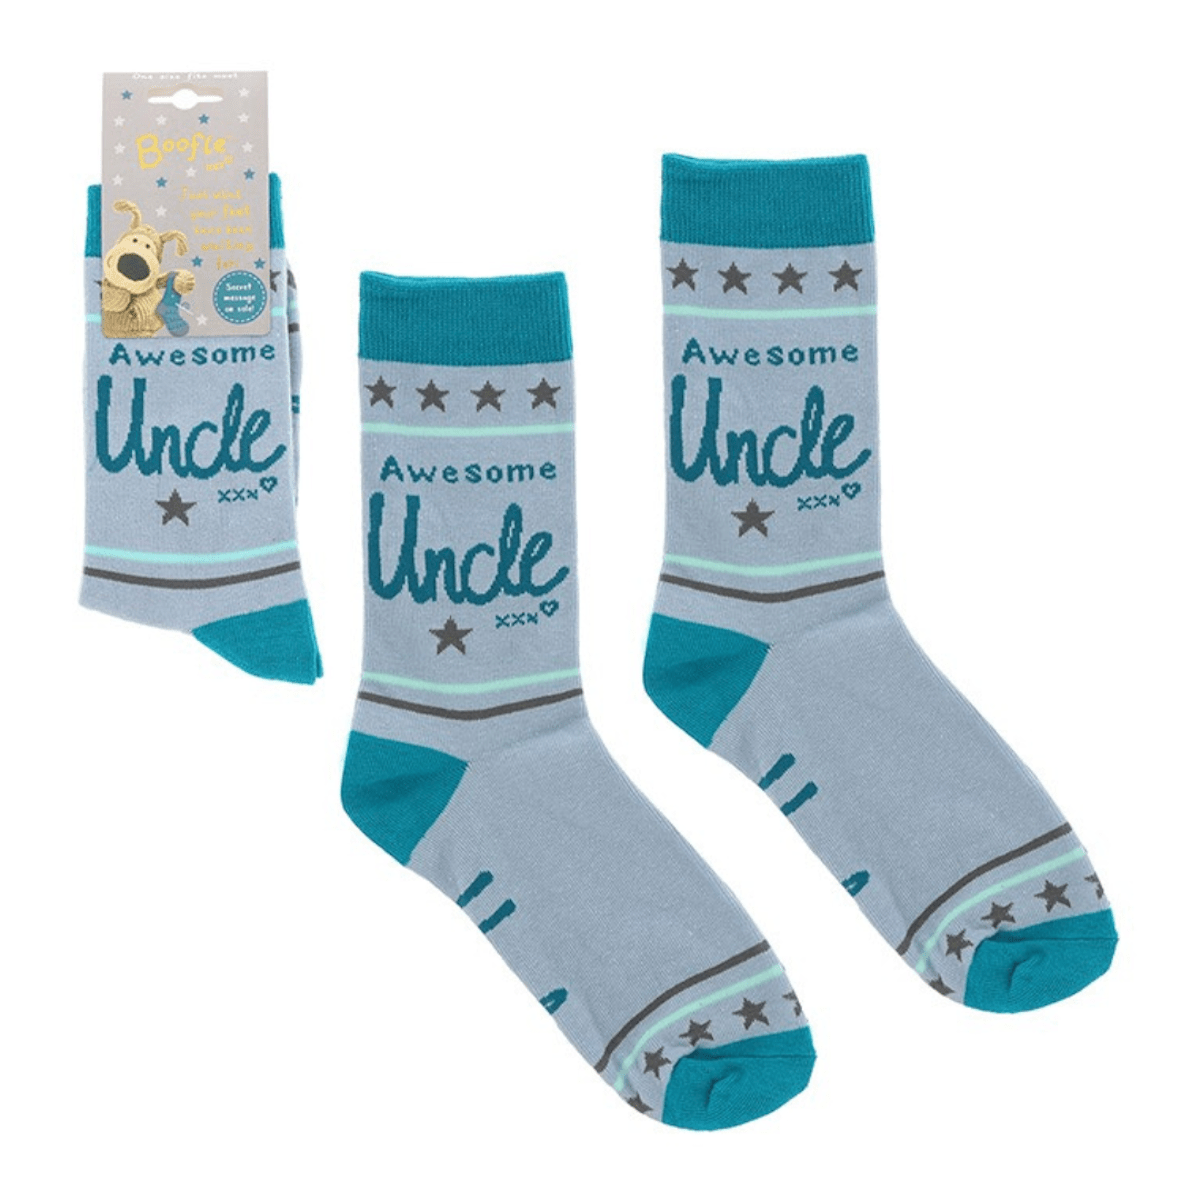 Joe Davies Socks Boofle Awesome Uncle Gift Socks